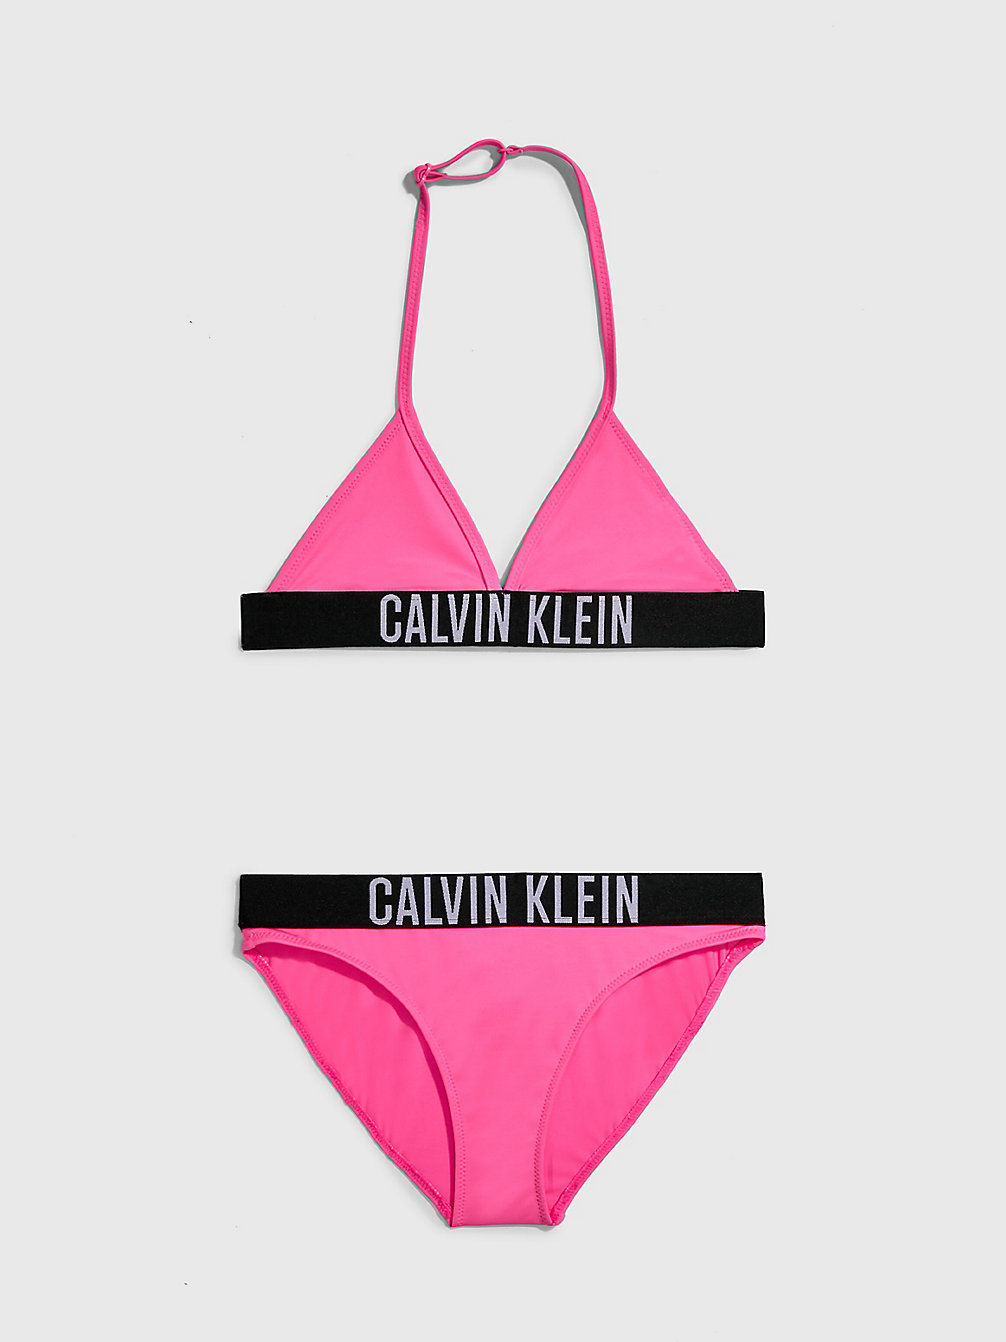 LOUD PINK Girls Triangle Bikini Set - Intense Power undefined girls Calvin Klein